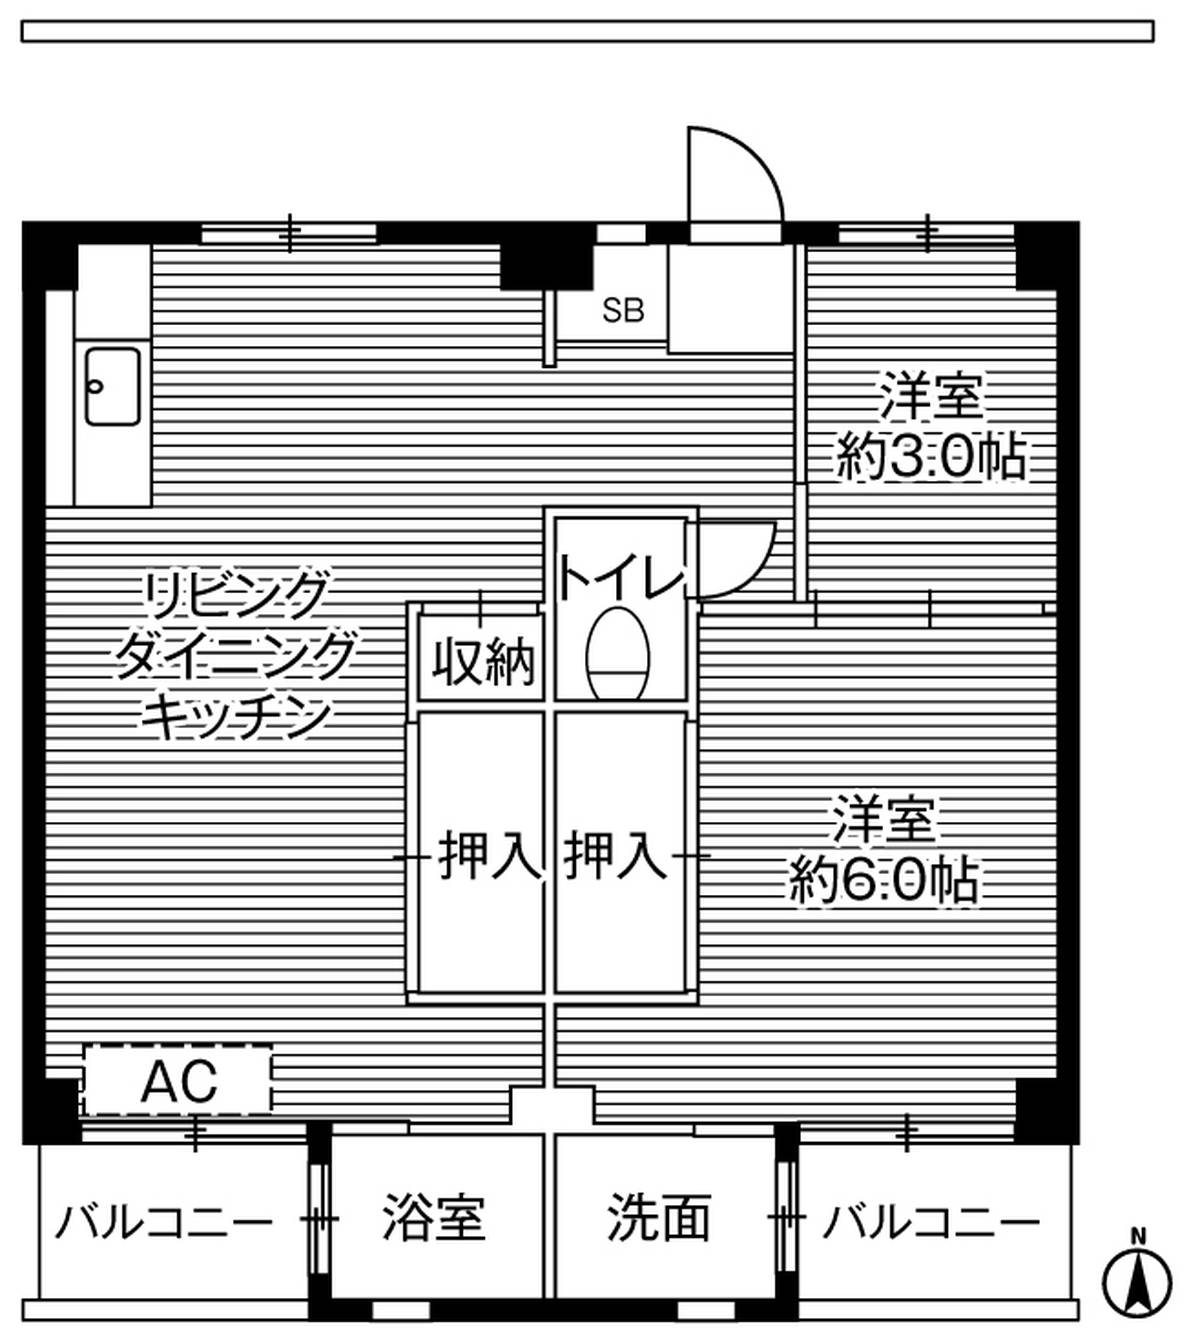 2LDK floorplan of Village House Katsuta in Yachiyo-shi